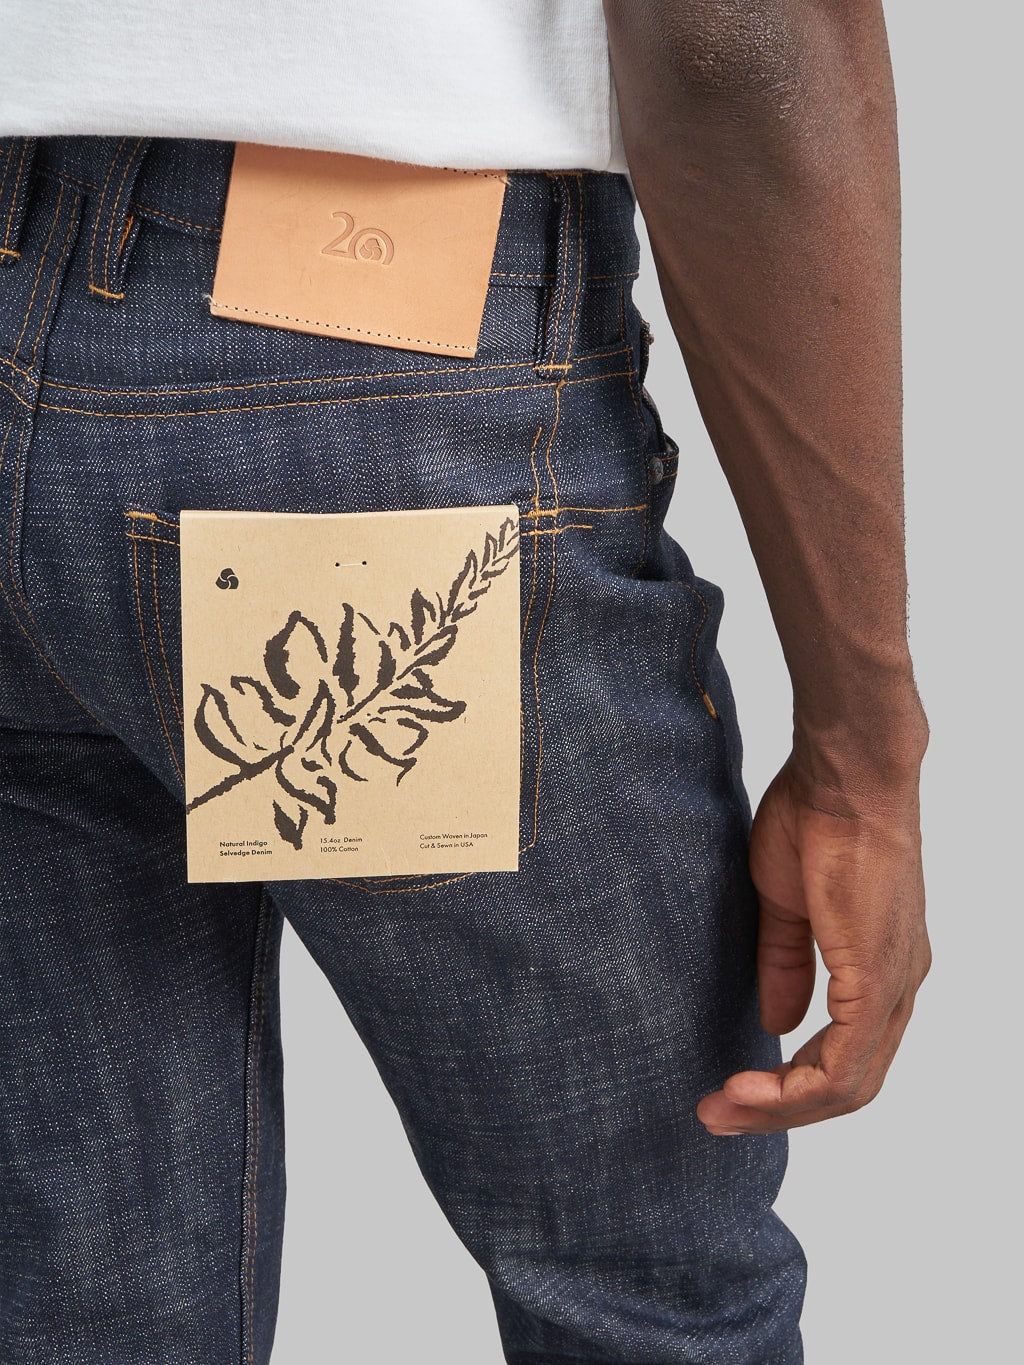 3sixteen CT 102xn 20th Anniversary Natural Indigo Jeans back pocket